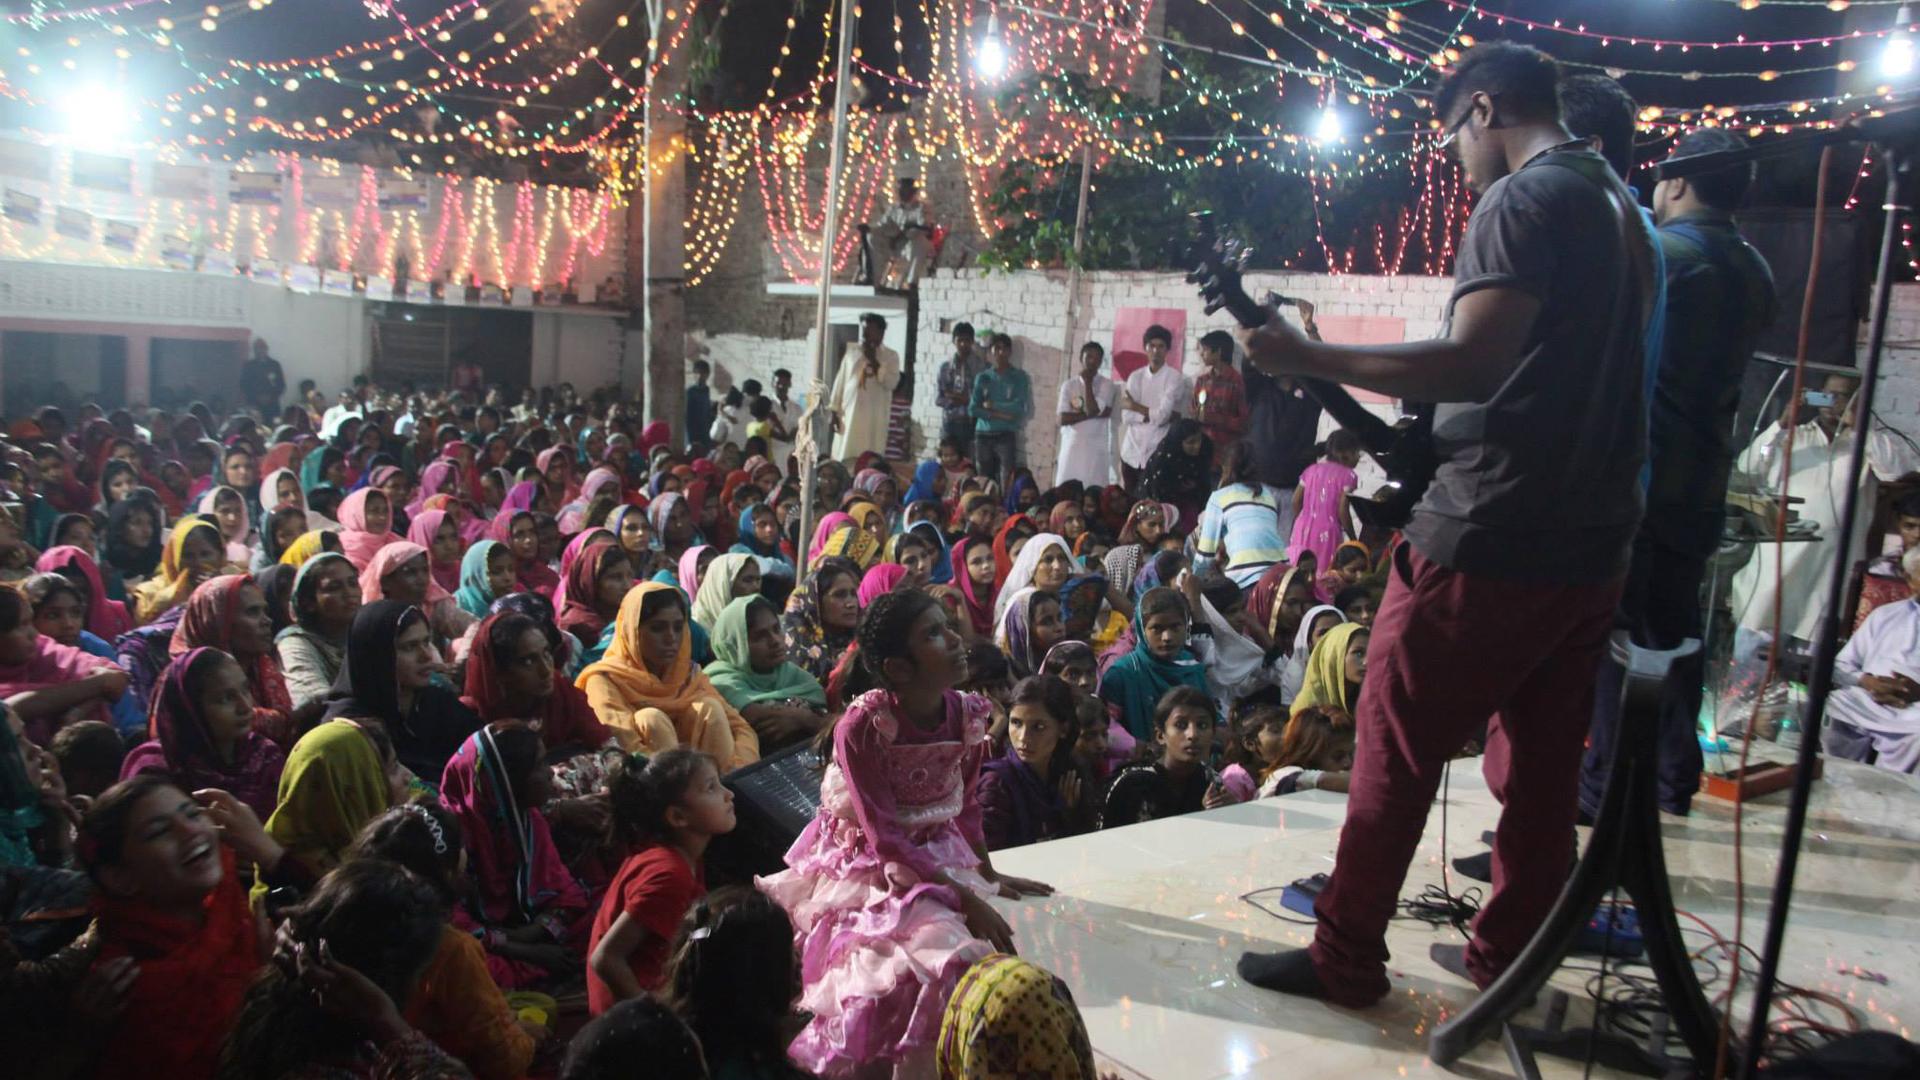 Hallelujah performs at an annual prayer event in Kasur, Pakistan.